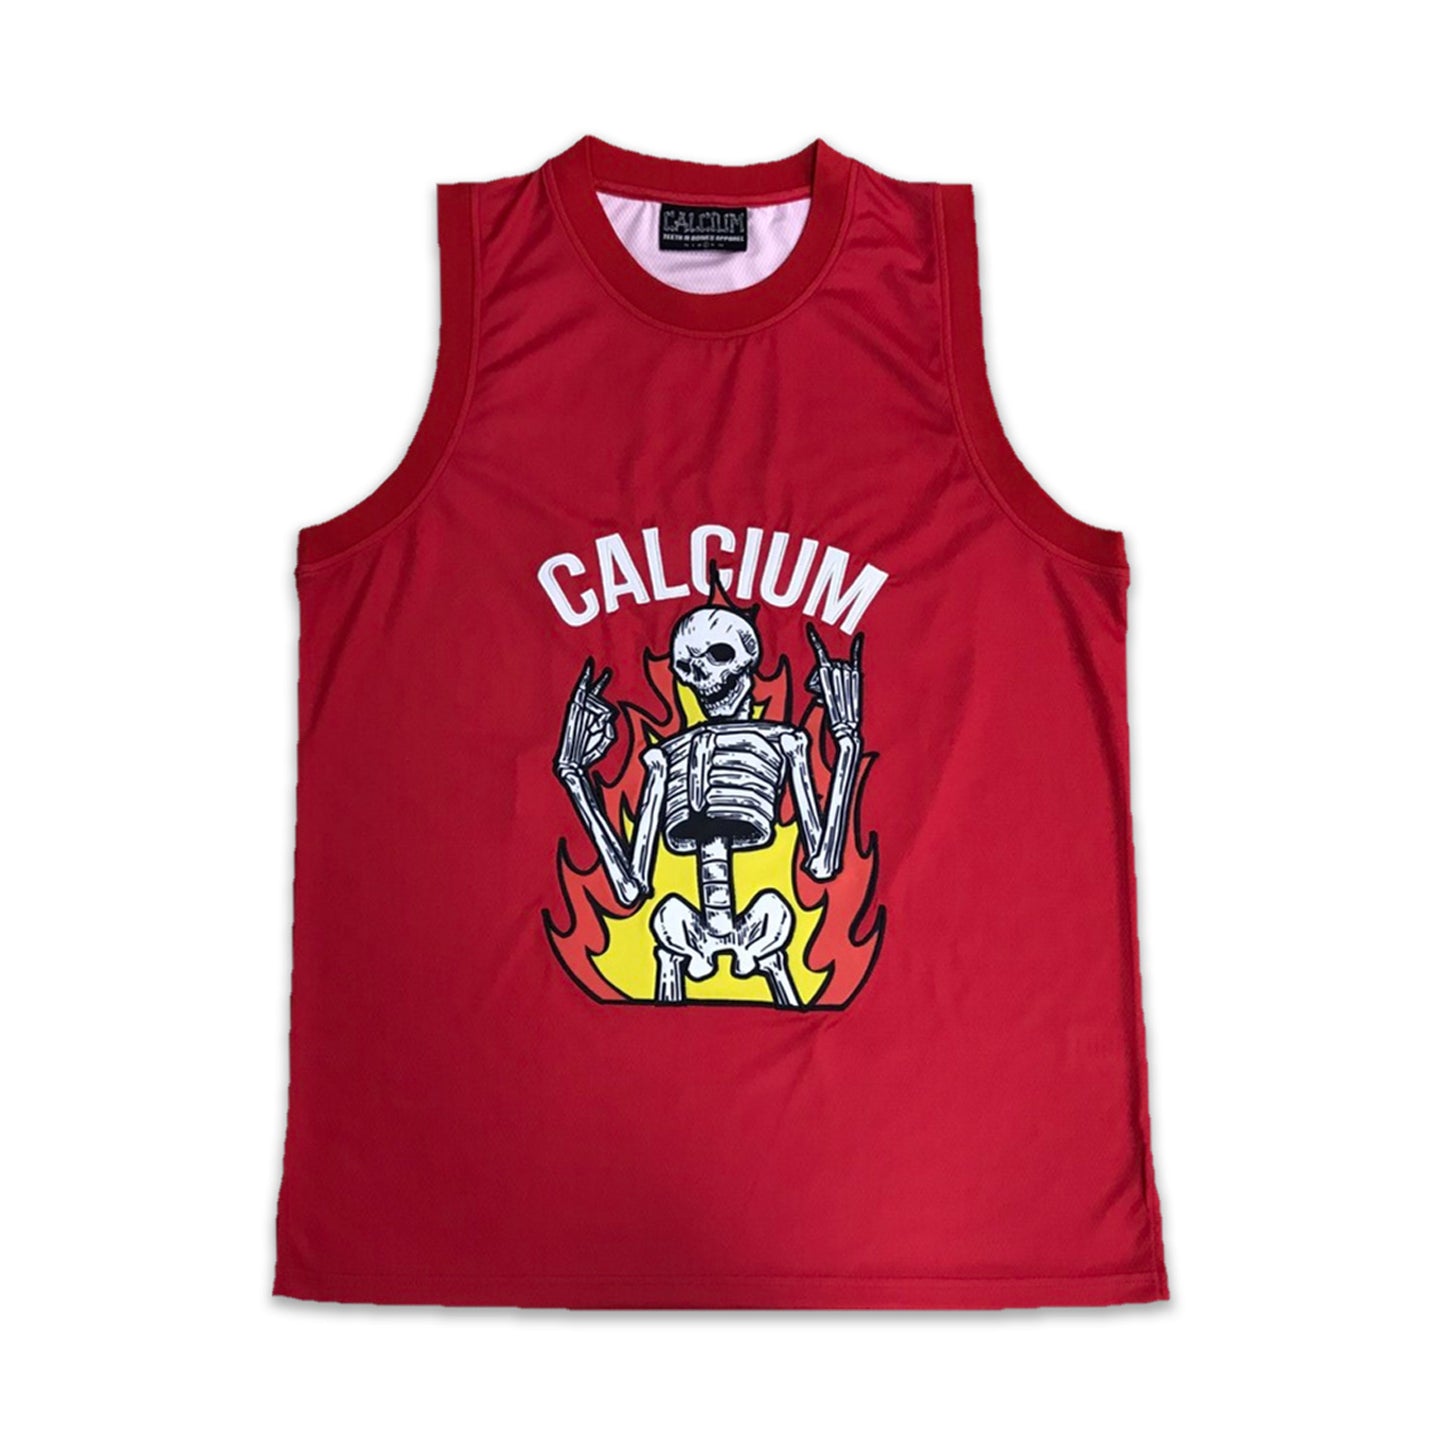 Calcium Skeleton Basketball Jersey